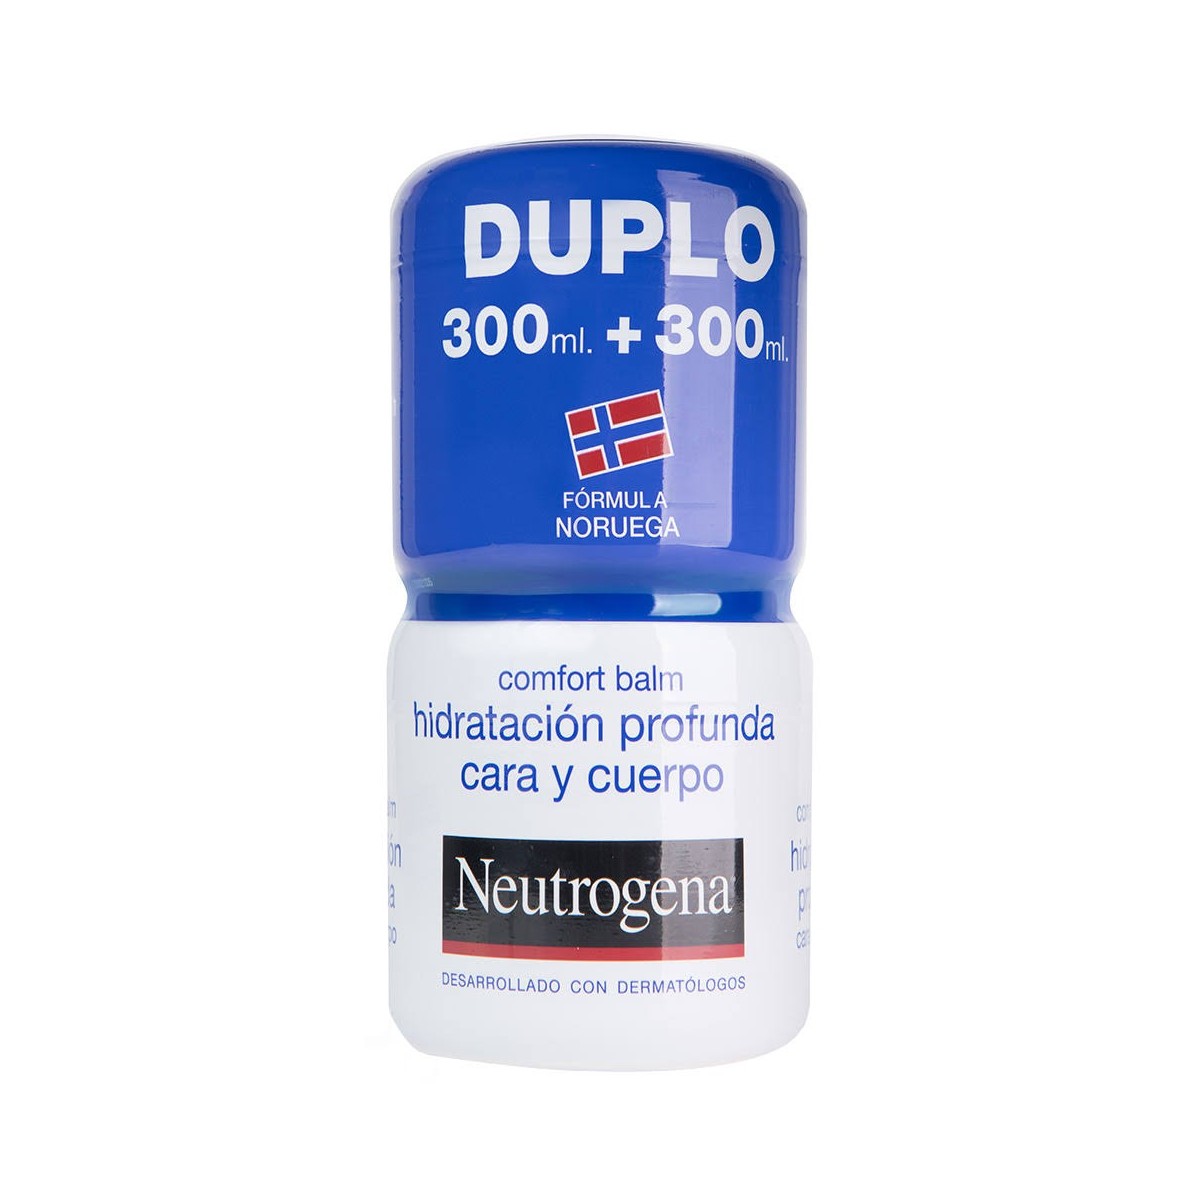 neutrogena-comfort-balm-hidratacion-profunda-300-ml-duplo